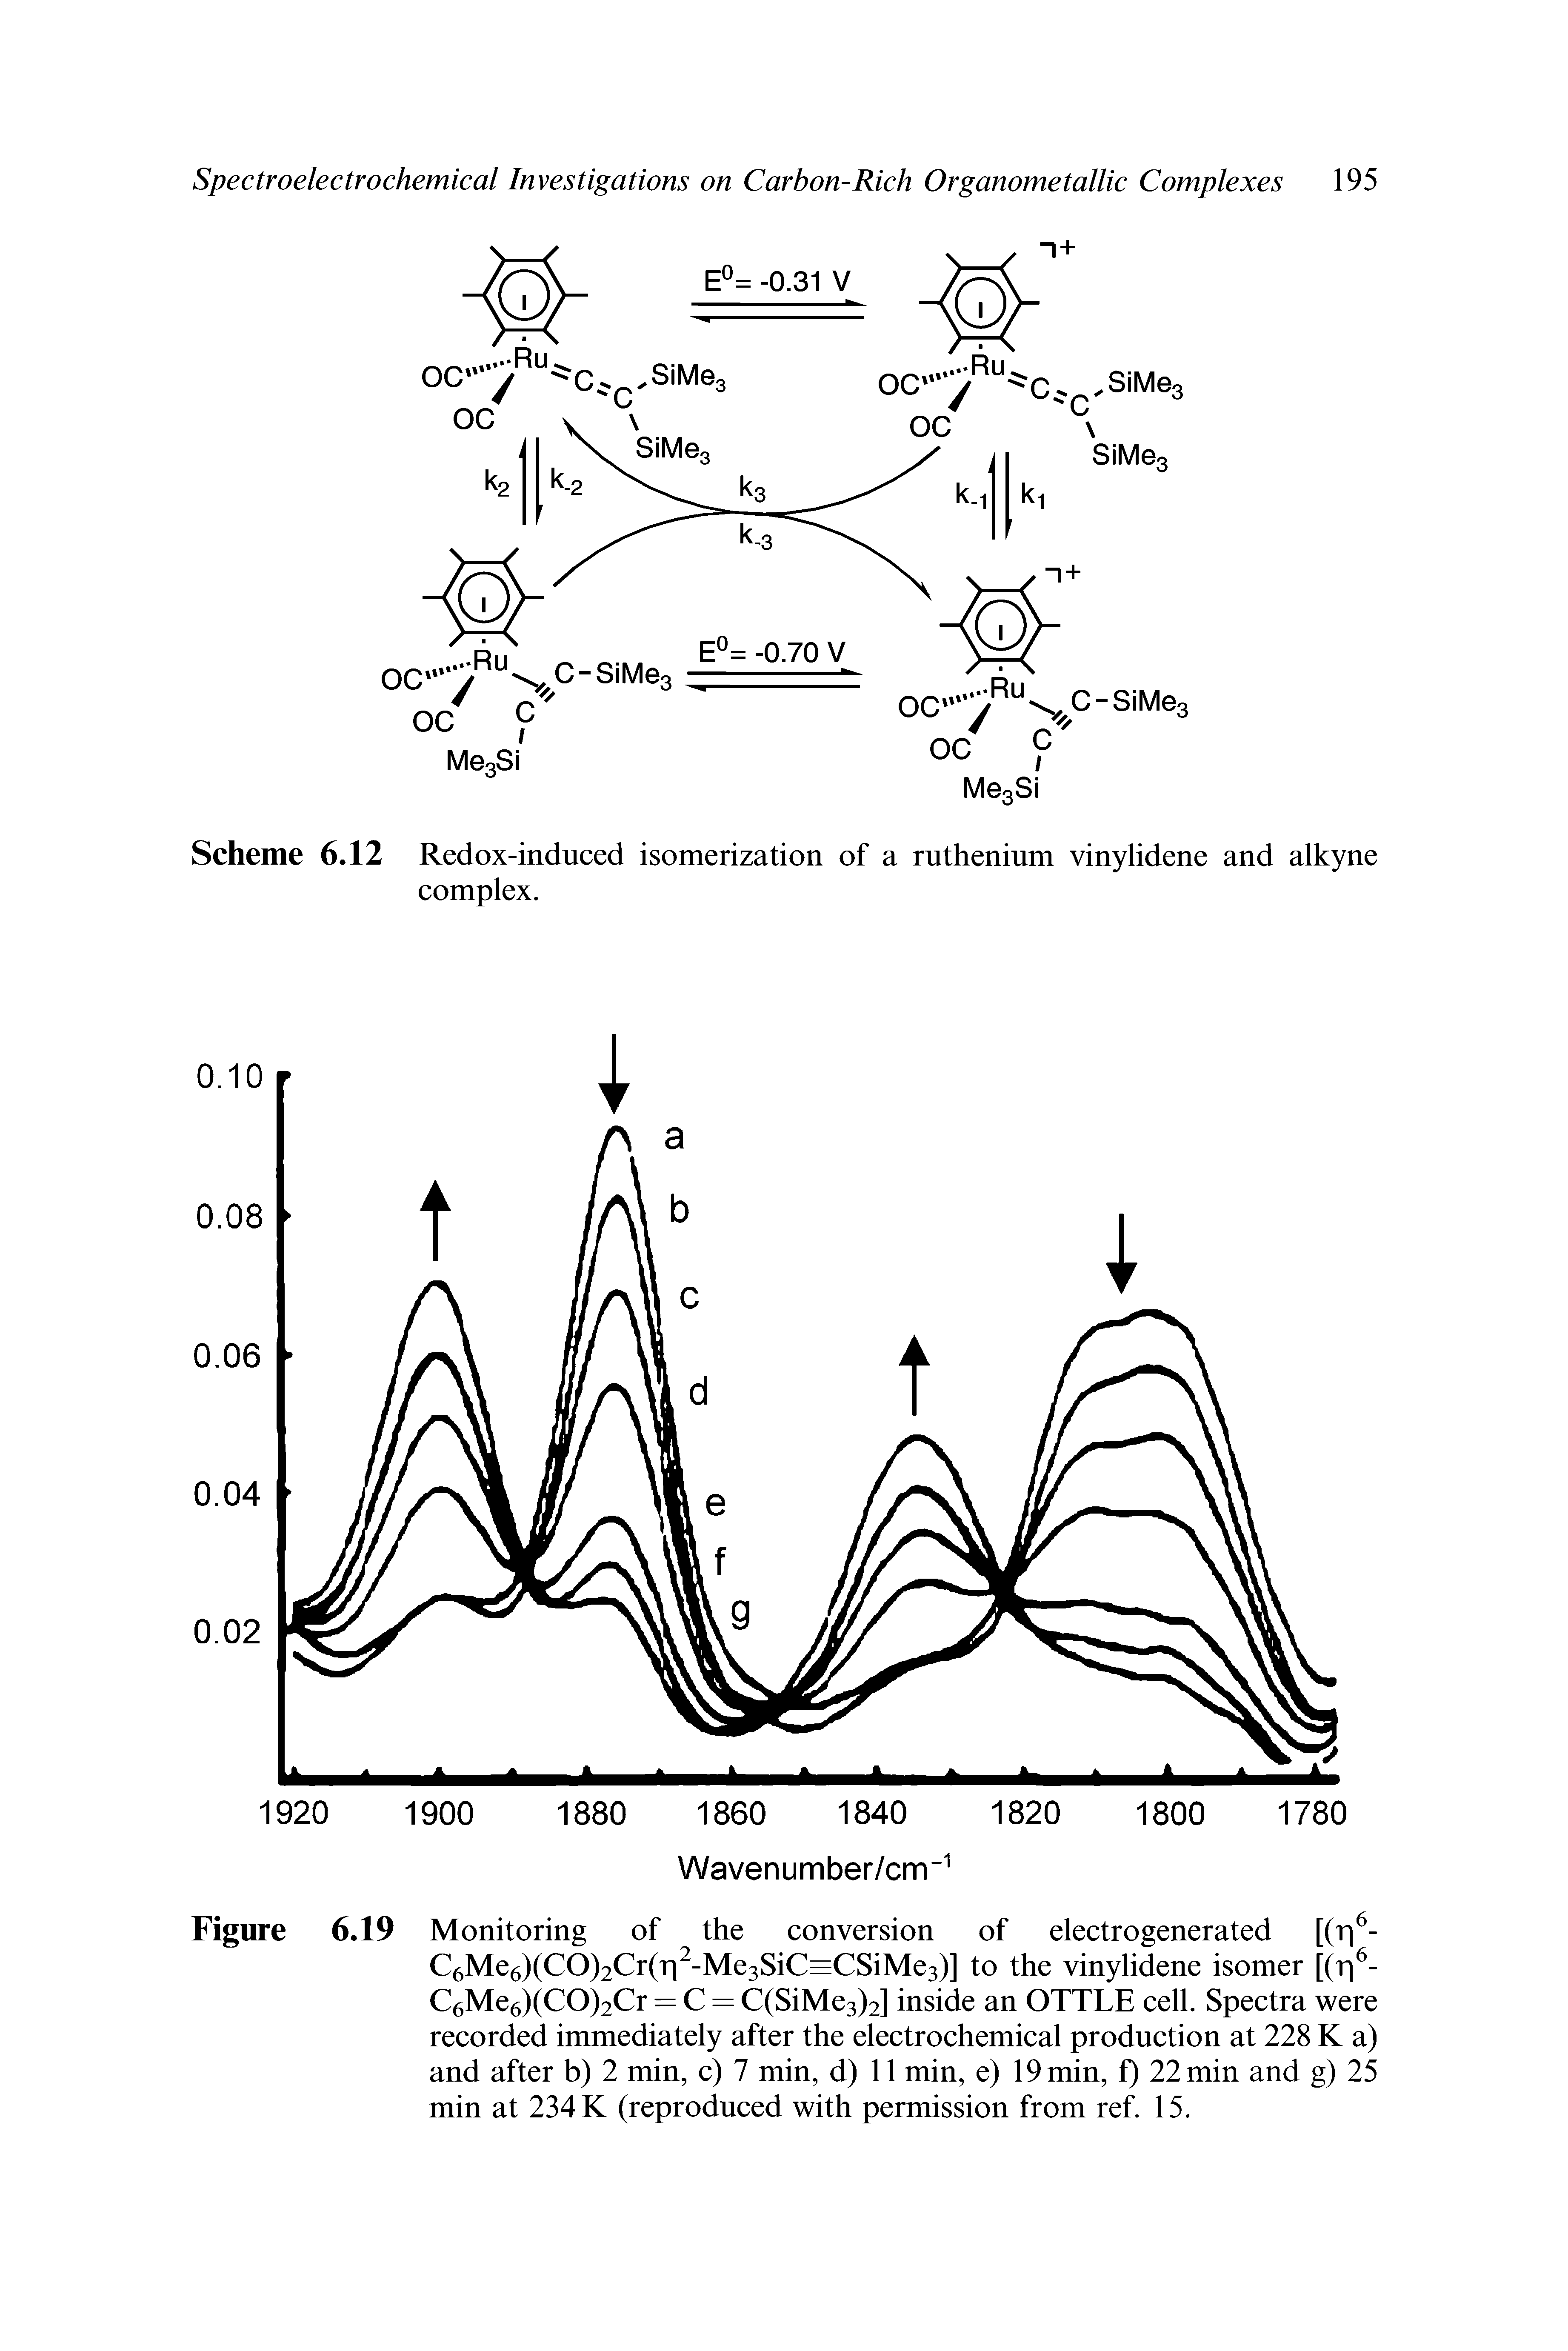 Scheme 6.12 Redox-induced isomerization of a ruthenium vinylidene and alkyne complex.